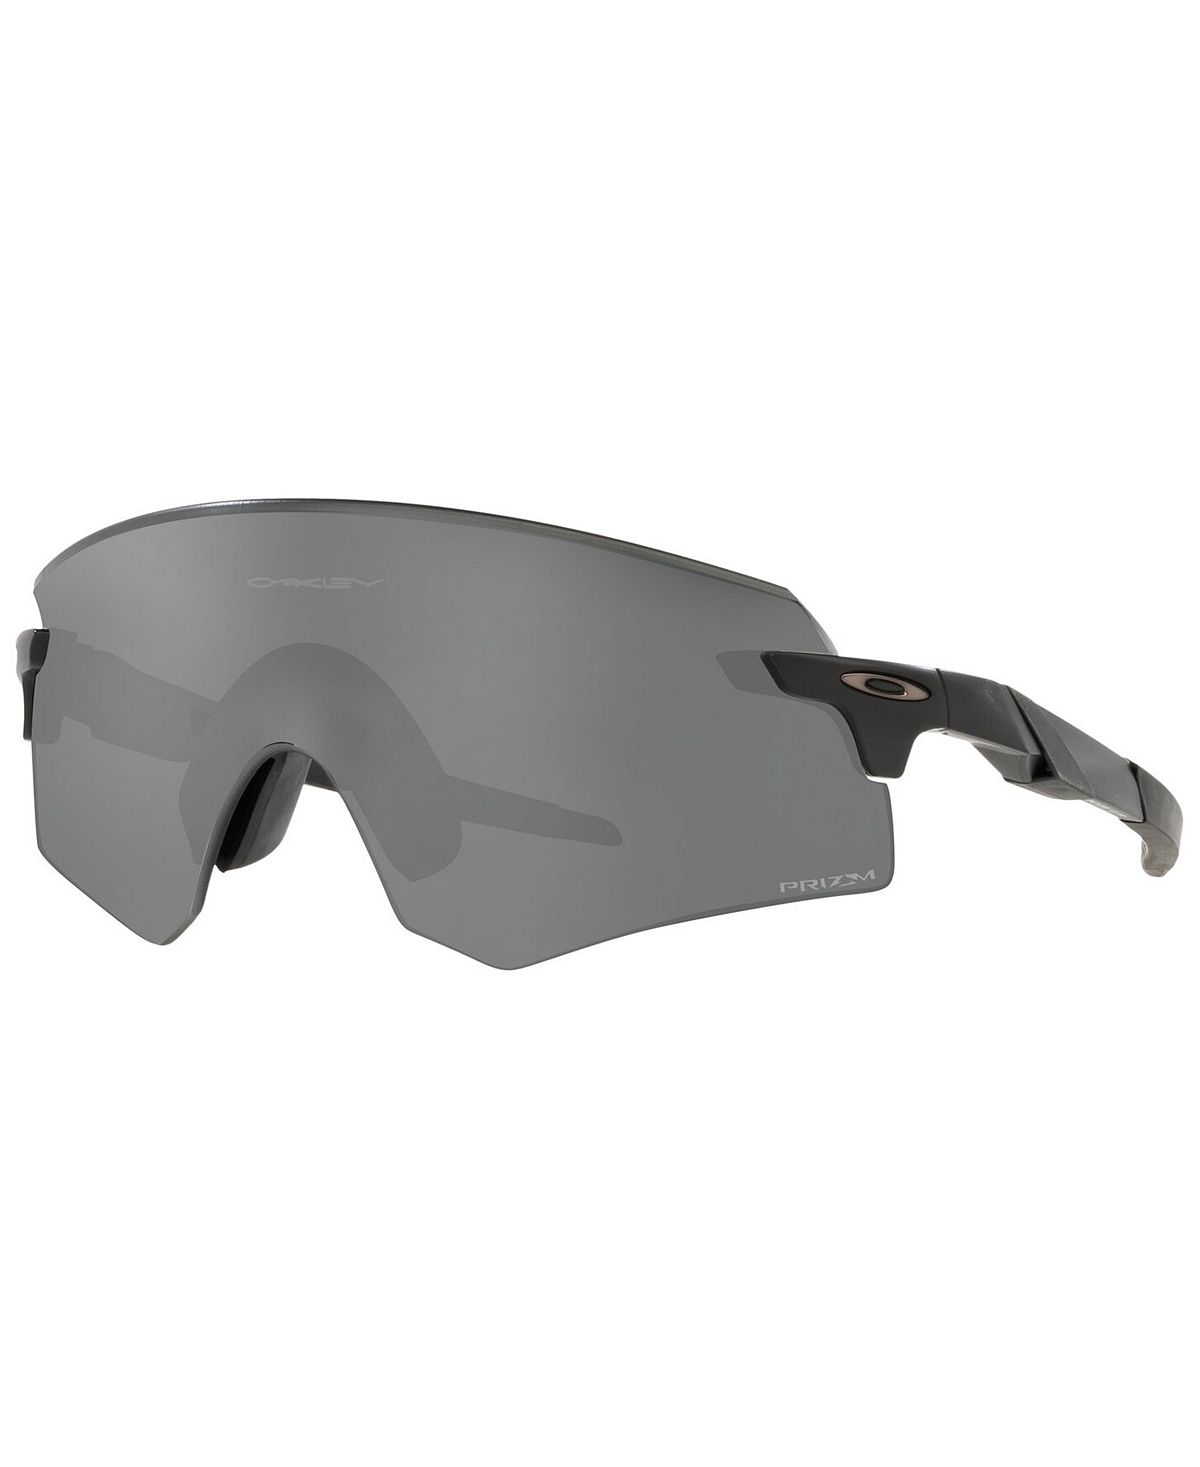 Мужские солнцезащитные очки Encoder, OO9471 36 Oakley pfi 703mbk matte black 700 мл 2962b001